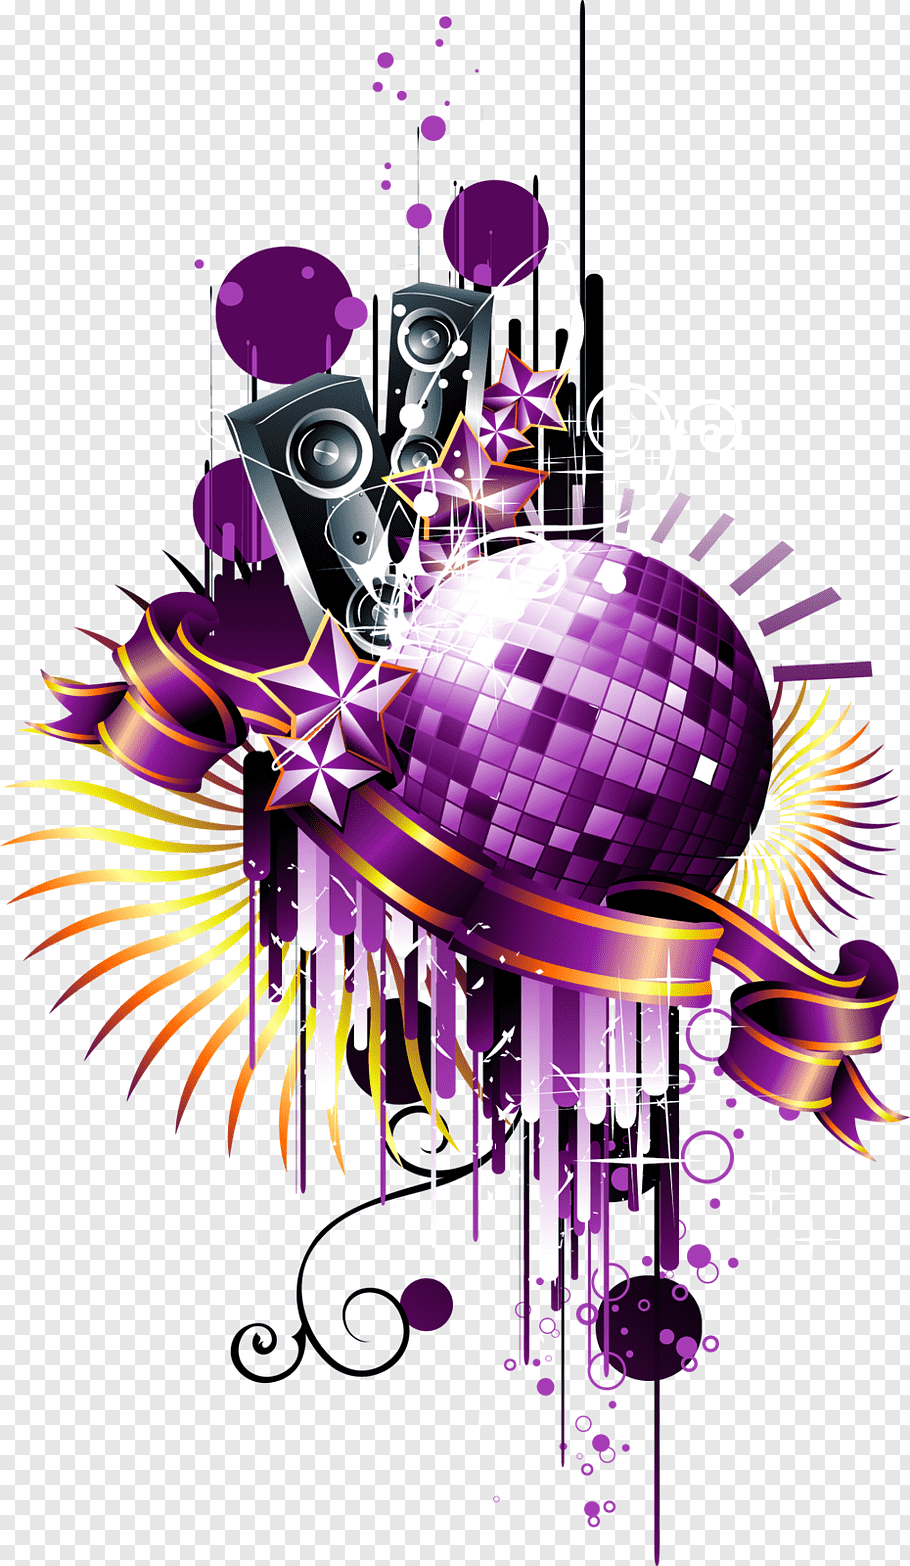 Purple And Black Music Themed Disco Ball Nightclub Black Music Poster Background 910x1566 Wallpaper Teahub Io